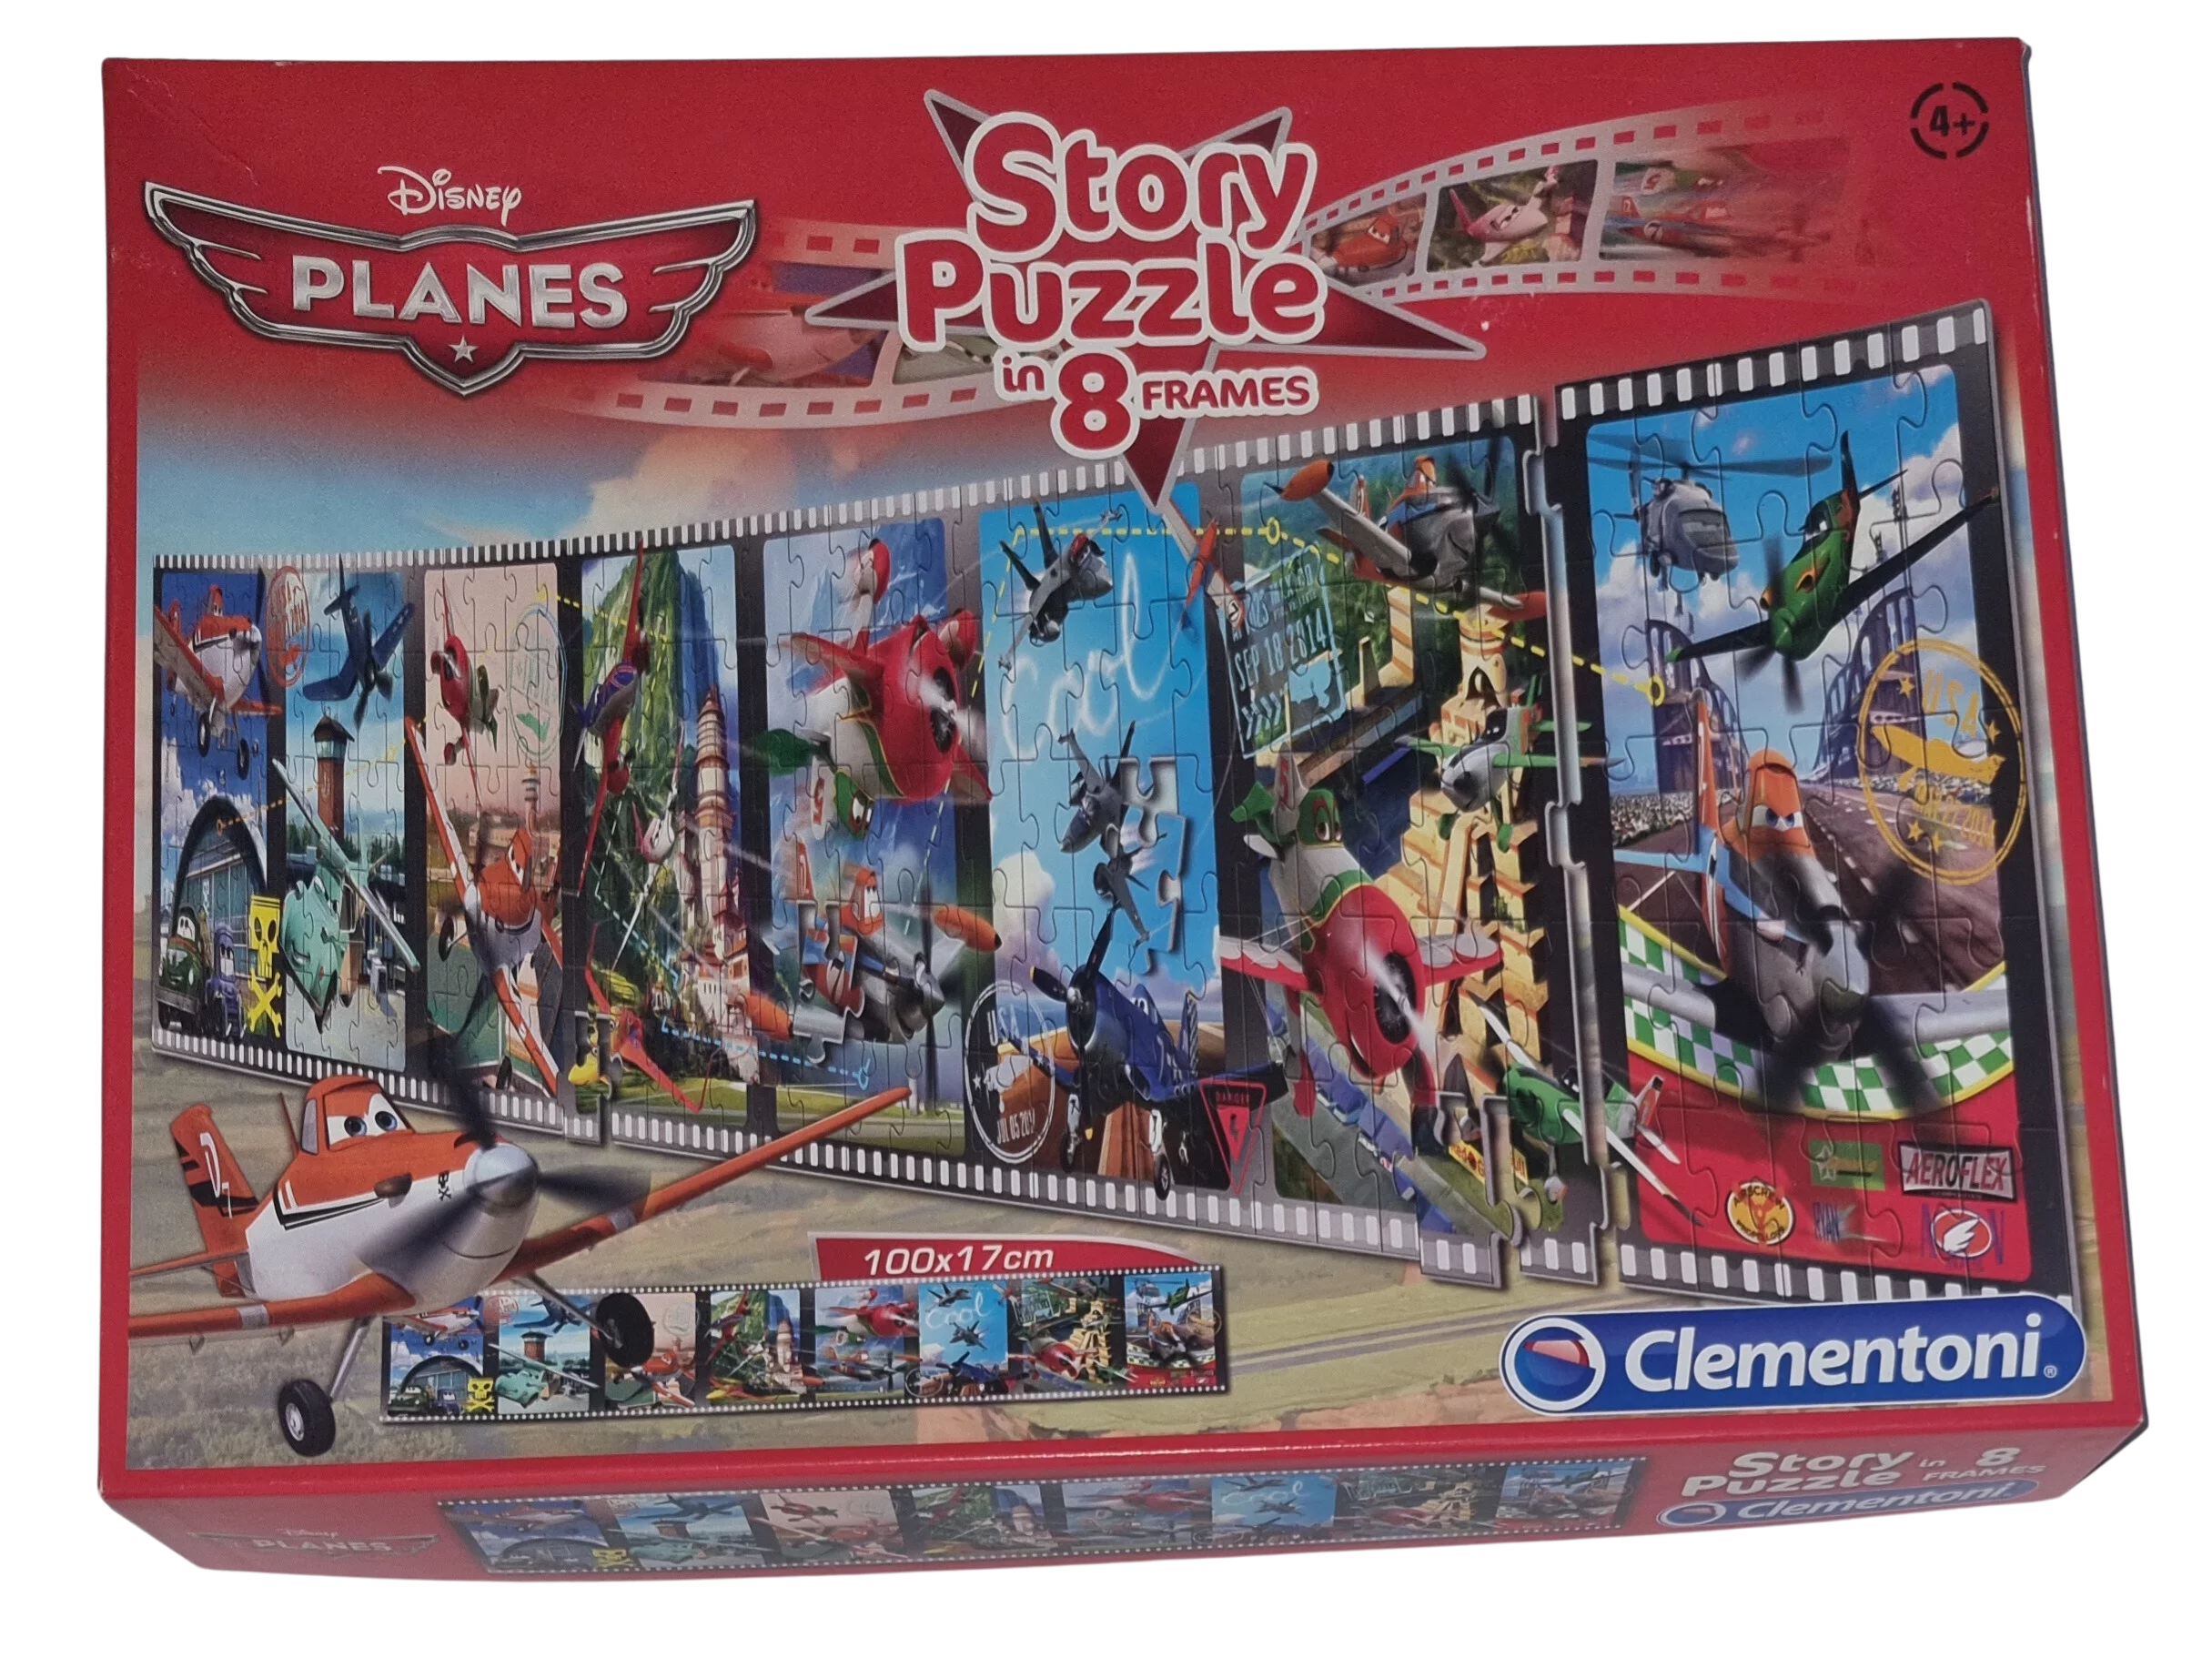 Clementoni Disney Planes Story Puzzle 9in 8 Frames 8 Puzzle in einem